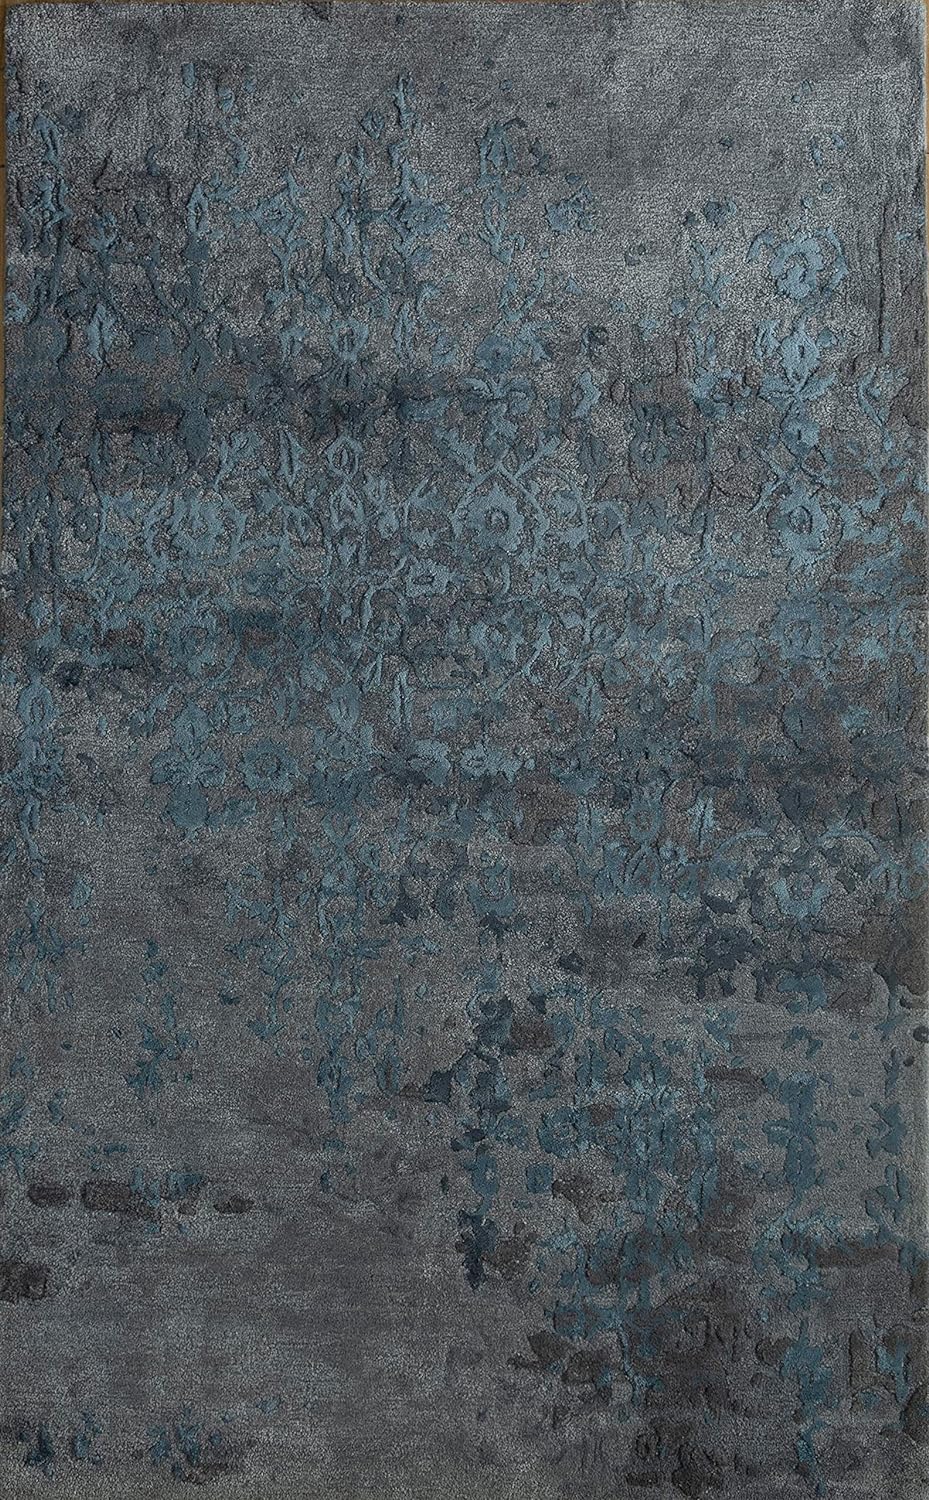 5x8 Feet Handmade Wool and Viscose Area Carpet | Wool and Viscose Hand-Tufted Area Carpet (5x8 Feet)" - Skyline Blue/Ensign Blue